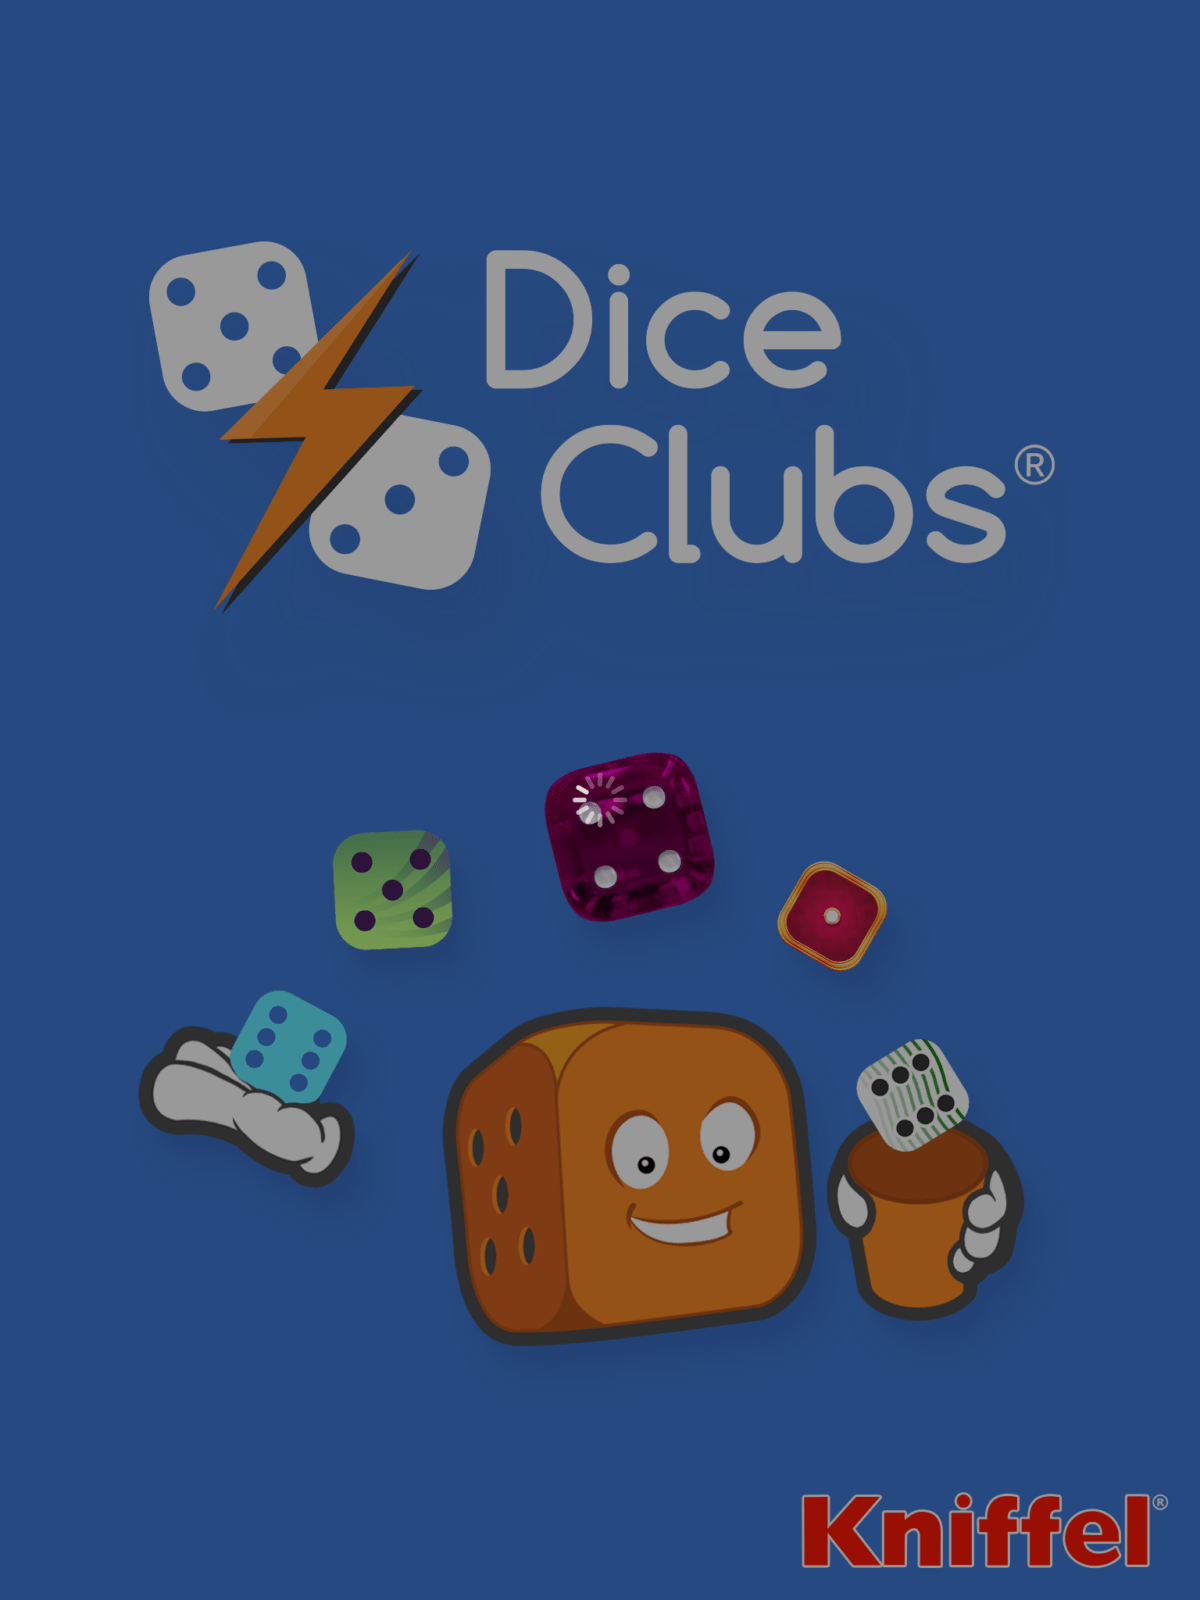 Dice Clubs